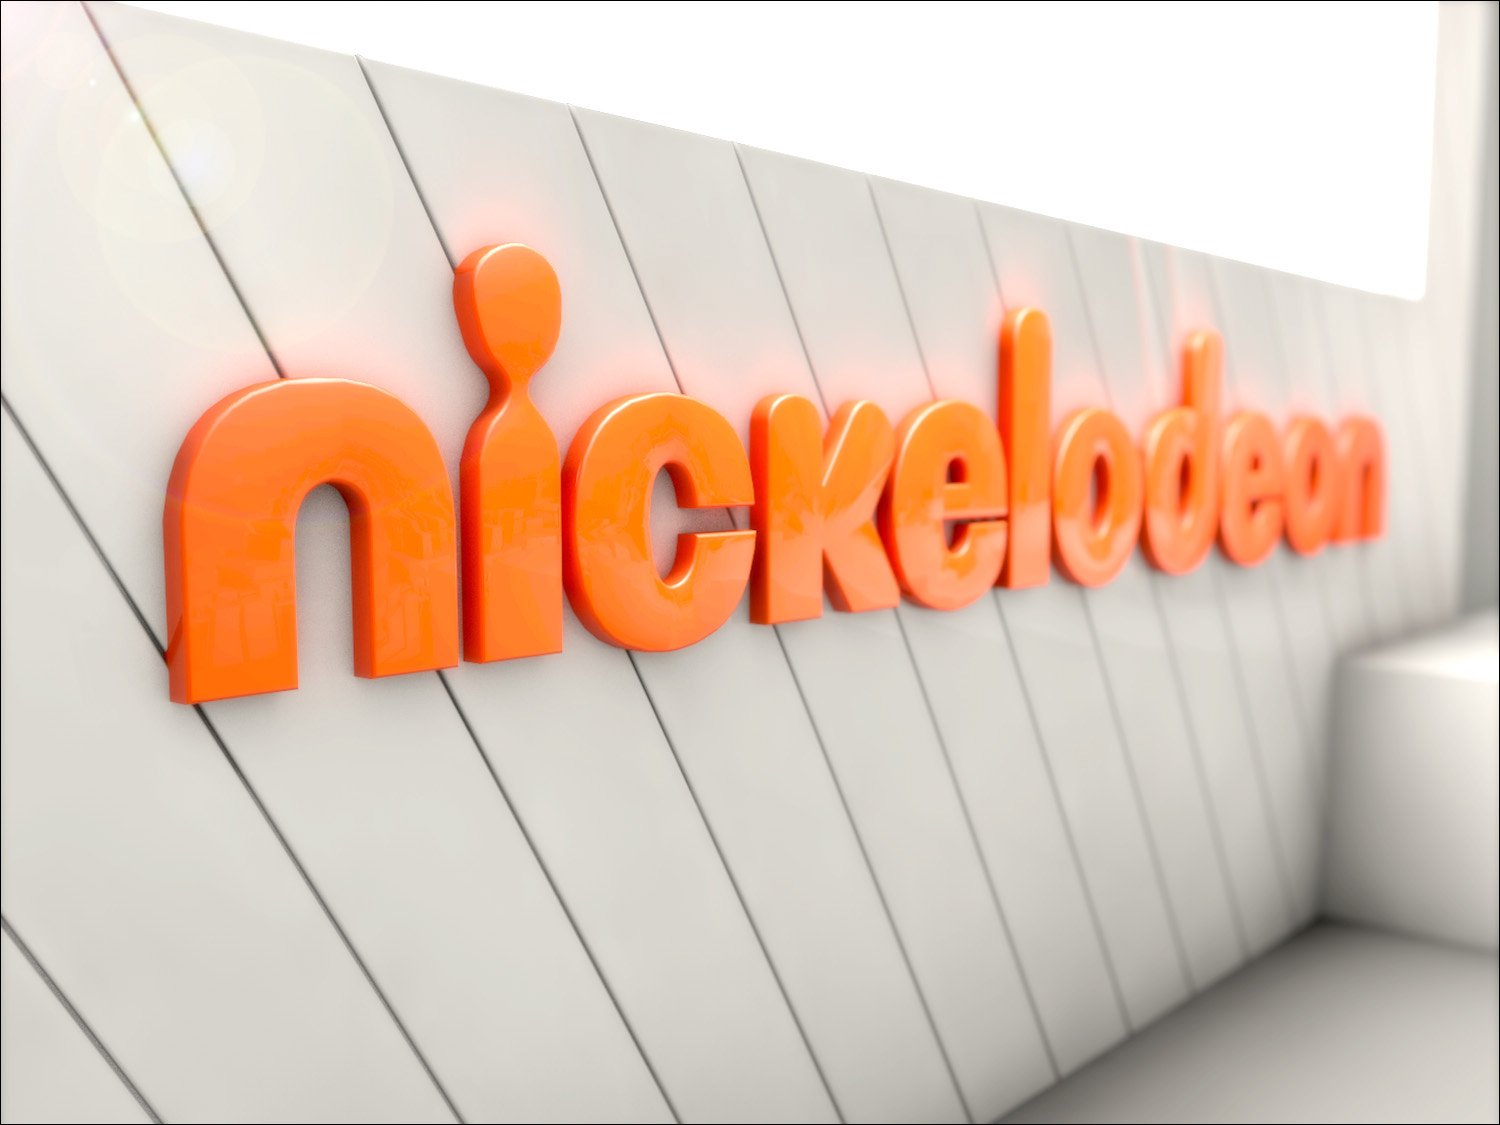 Nick channel. Никелодеон логотип 2012. Телеканал Nickelodeon. Логотип канала Nickelodeon. Никелодеон канал в России.